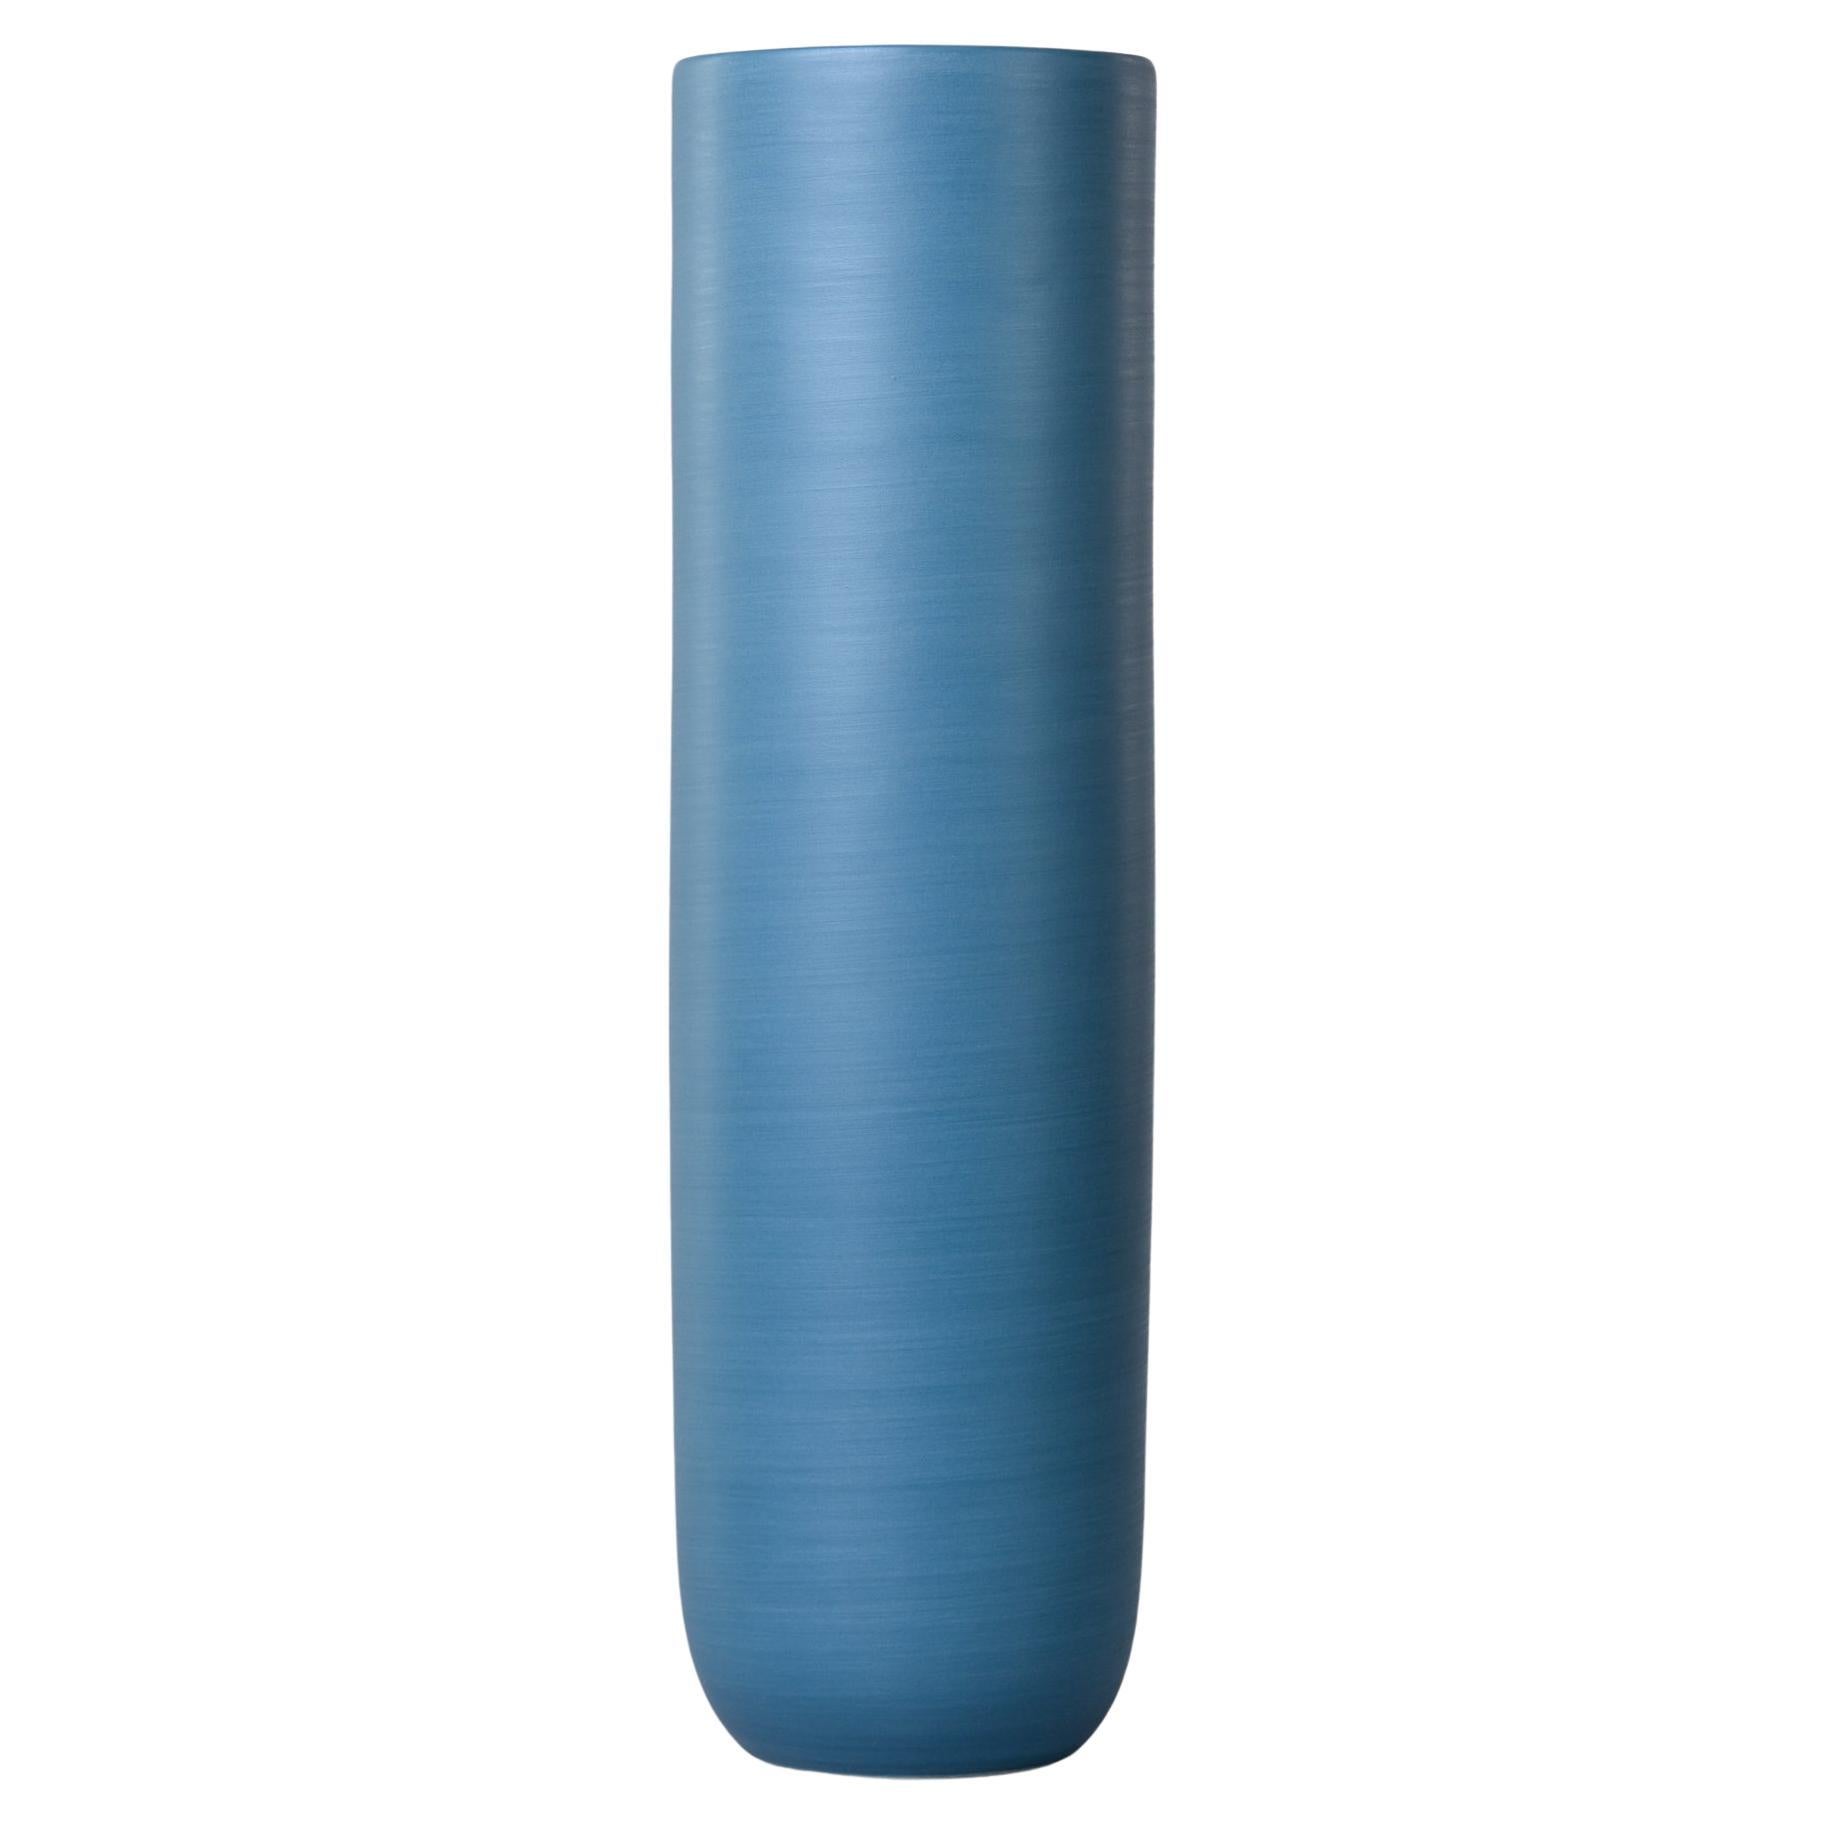 New Rina Menardi Canna 2 Vase in Teal Blue